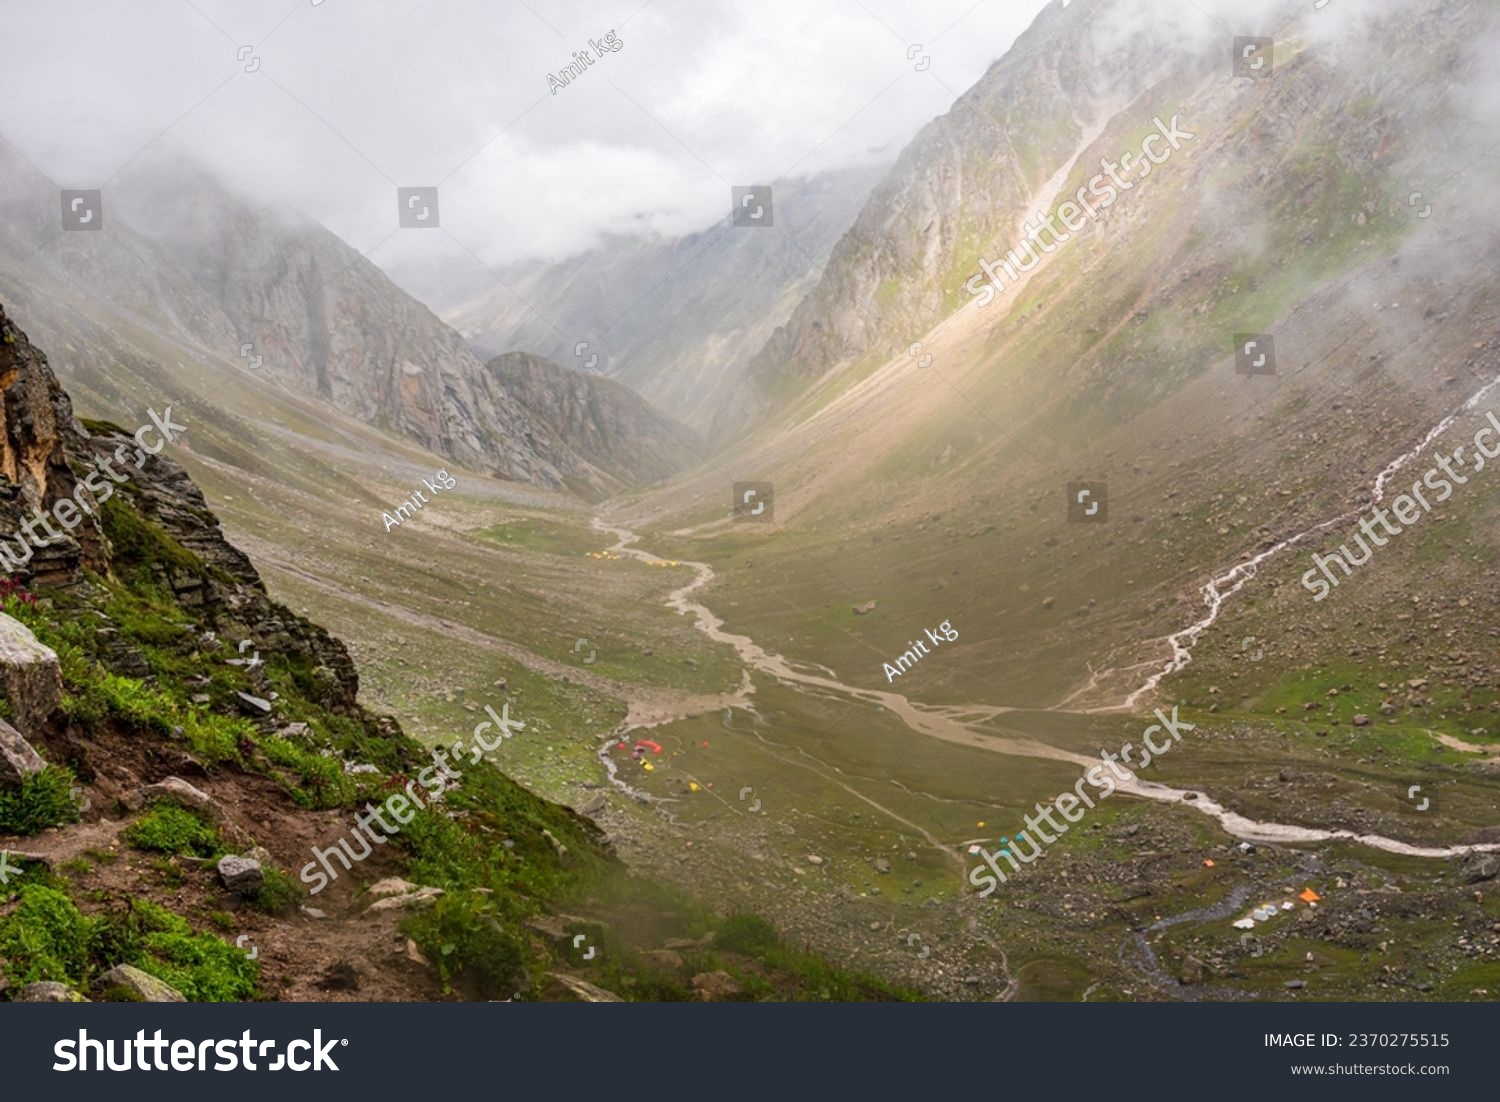 View enroute to Hampta pass hiking trail near 'shea goru' camp site in lahaul spiti near Manali, Himachal Pradesh, India. #2370275515